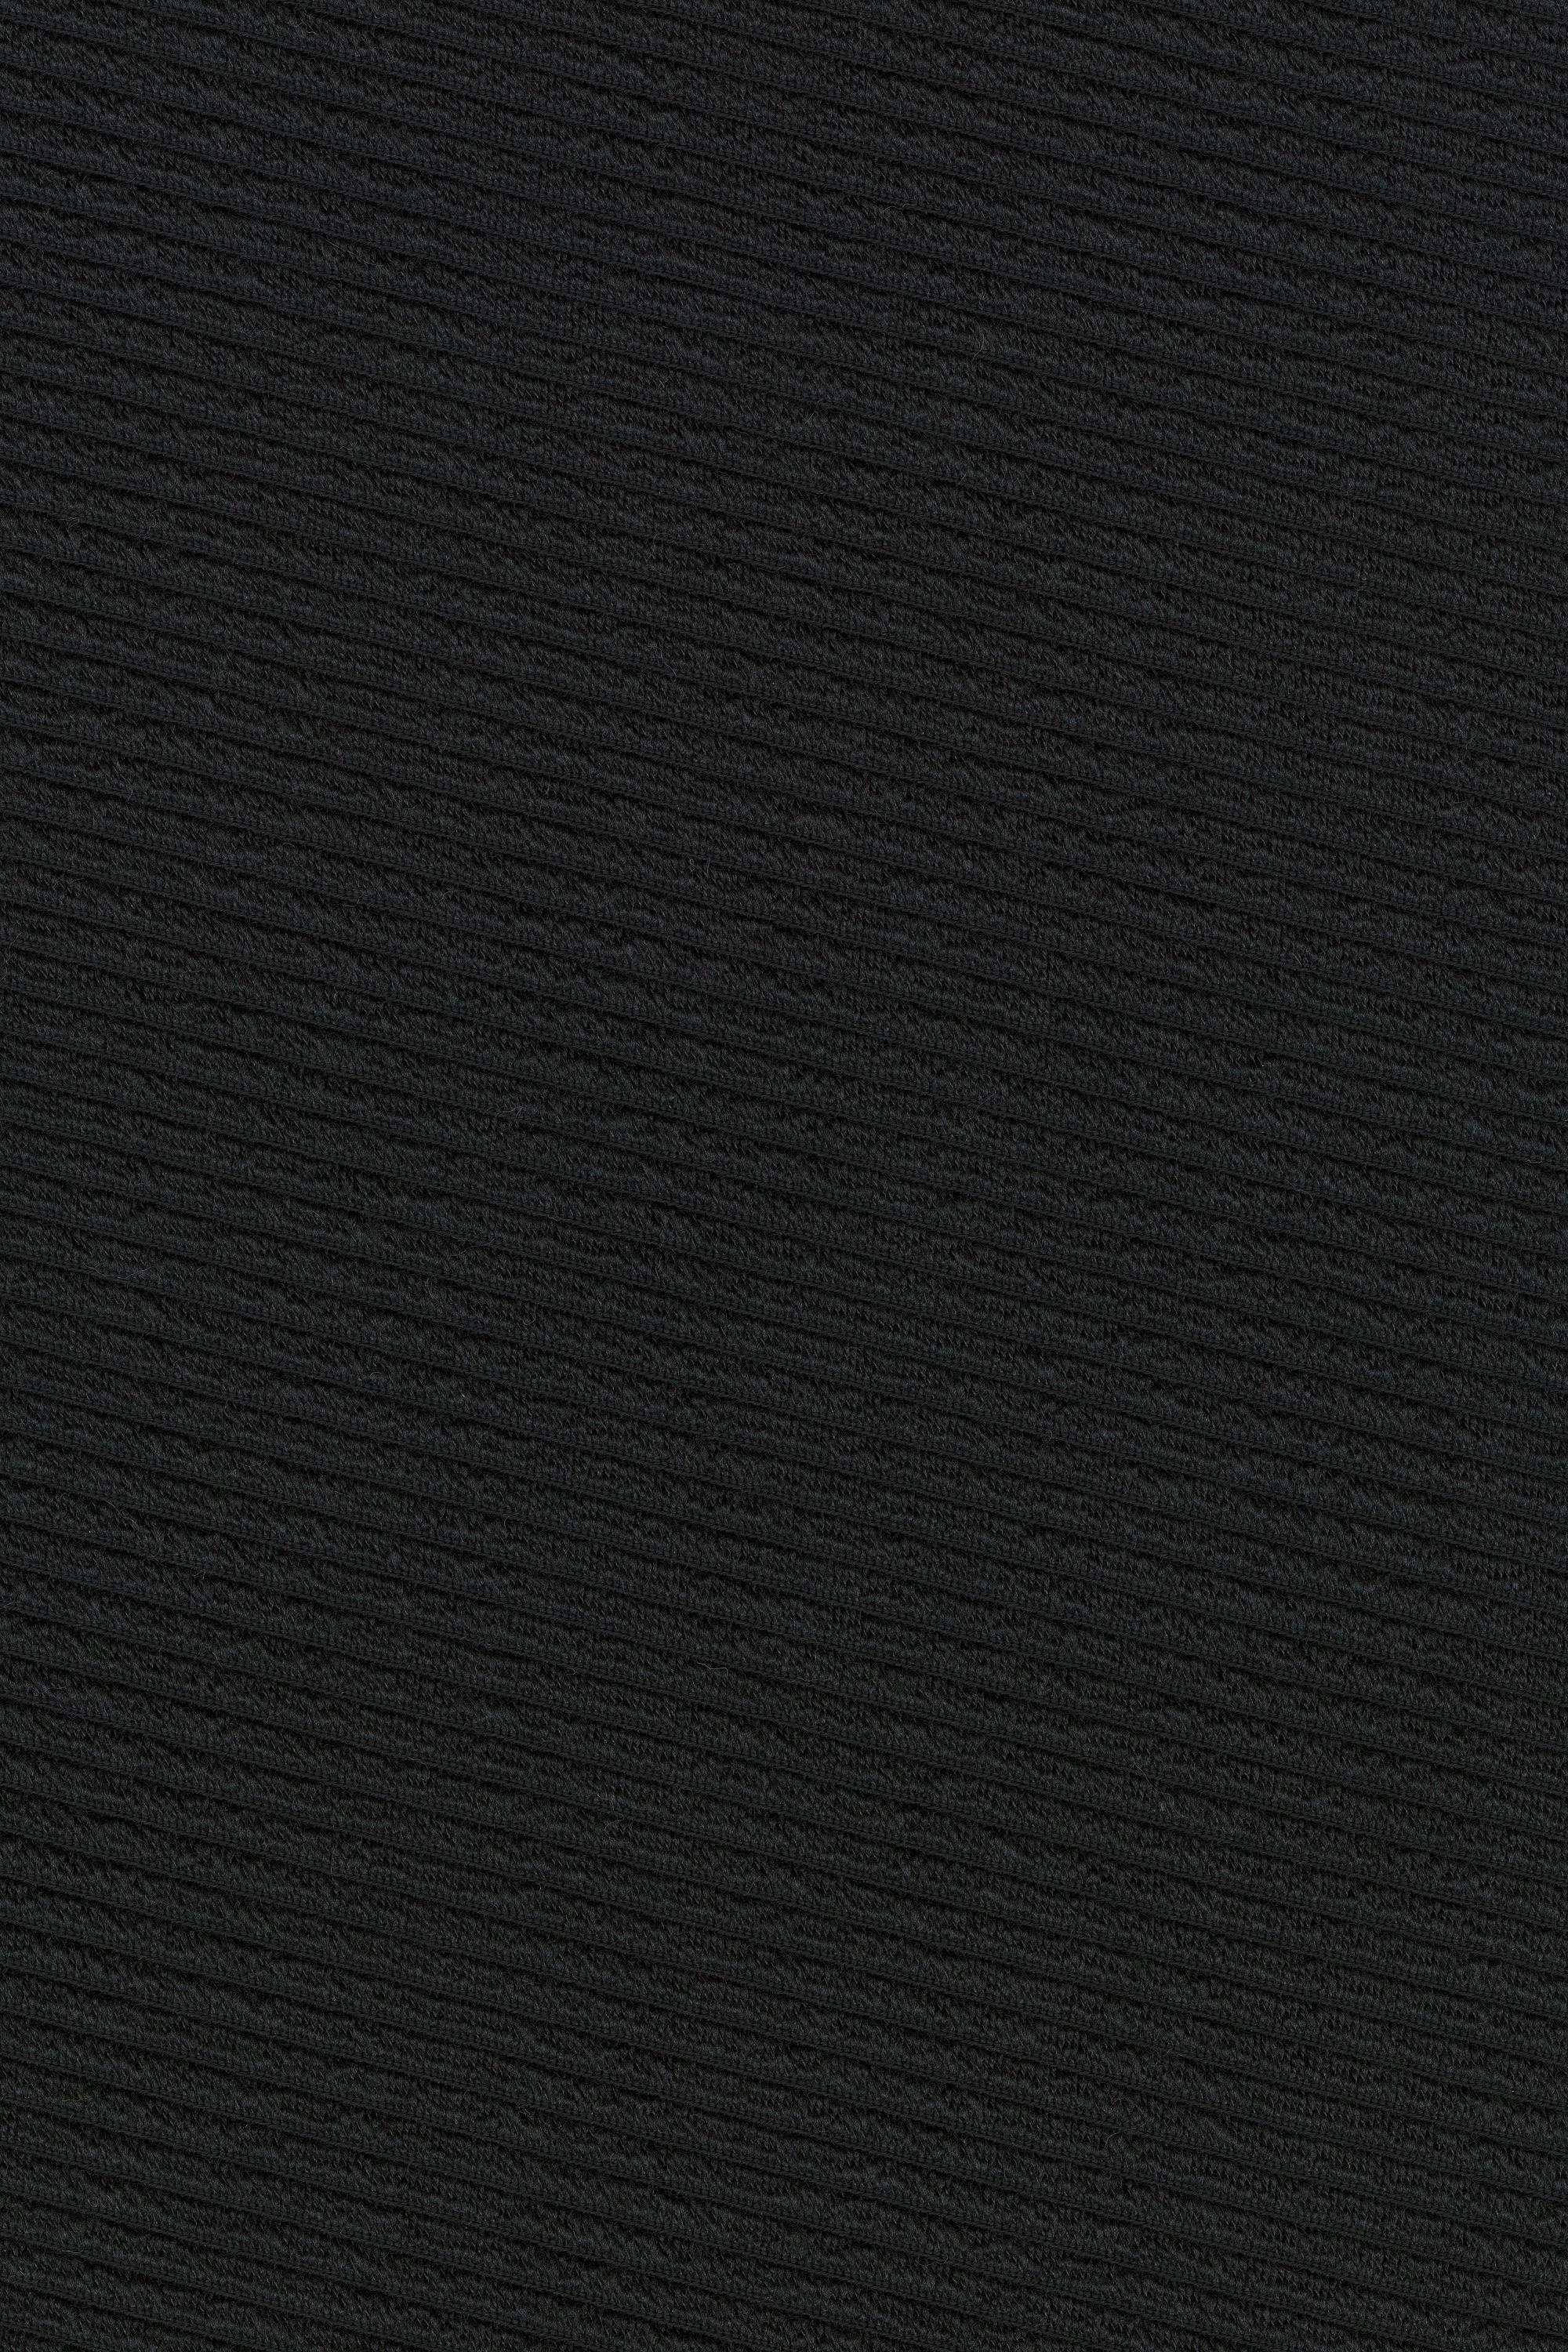 Kvadrat Aaren Upholstery Fabric 0193 by Raf Simons